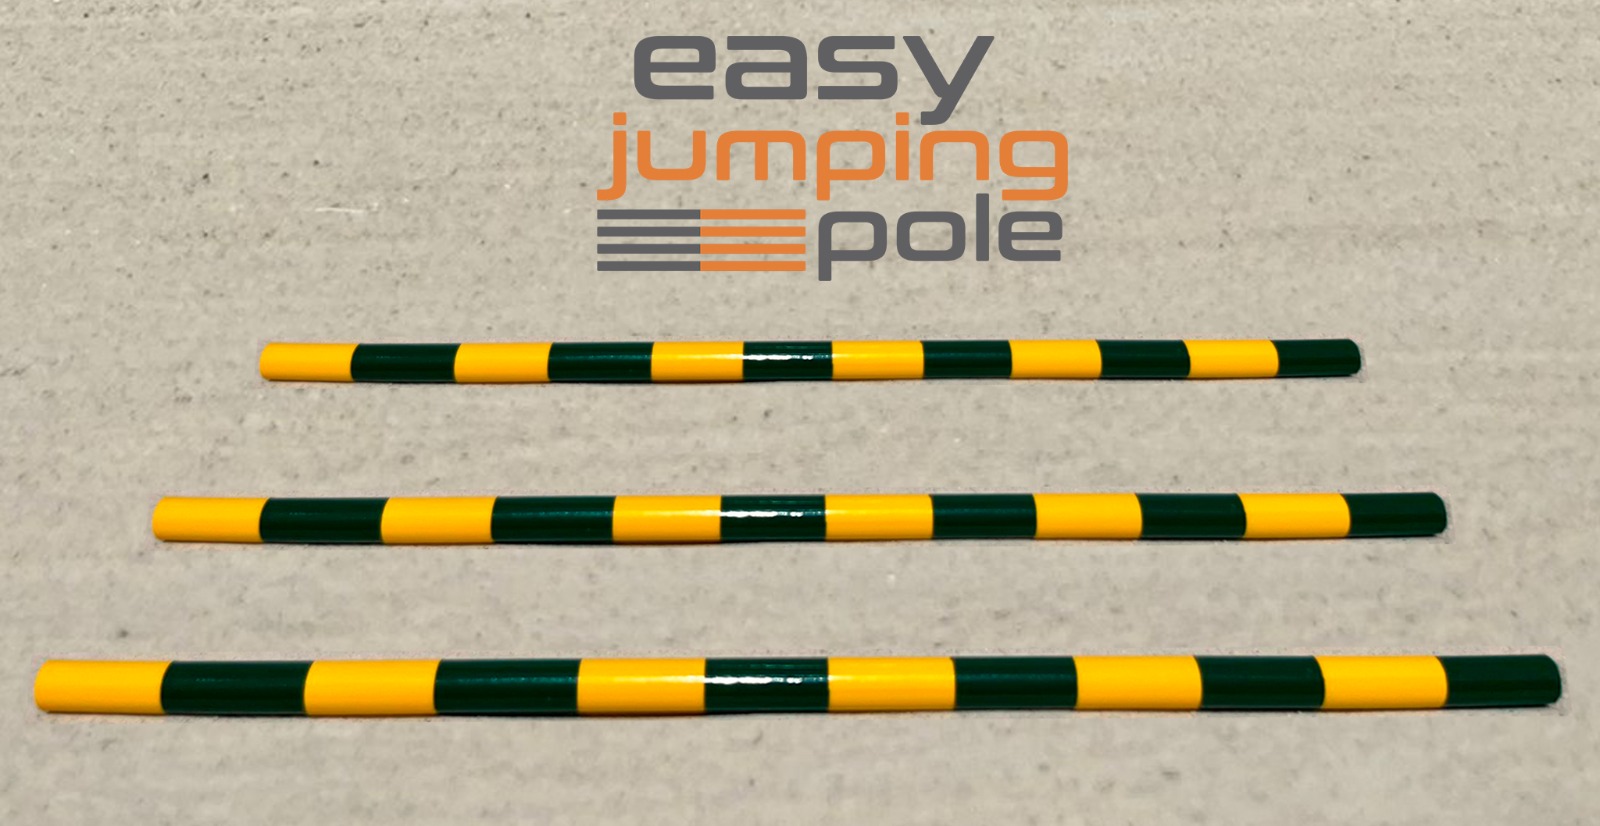 Easy jumping pole Model C-13